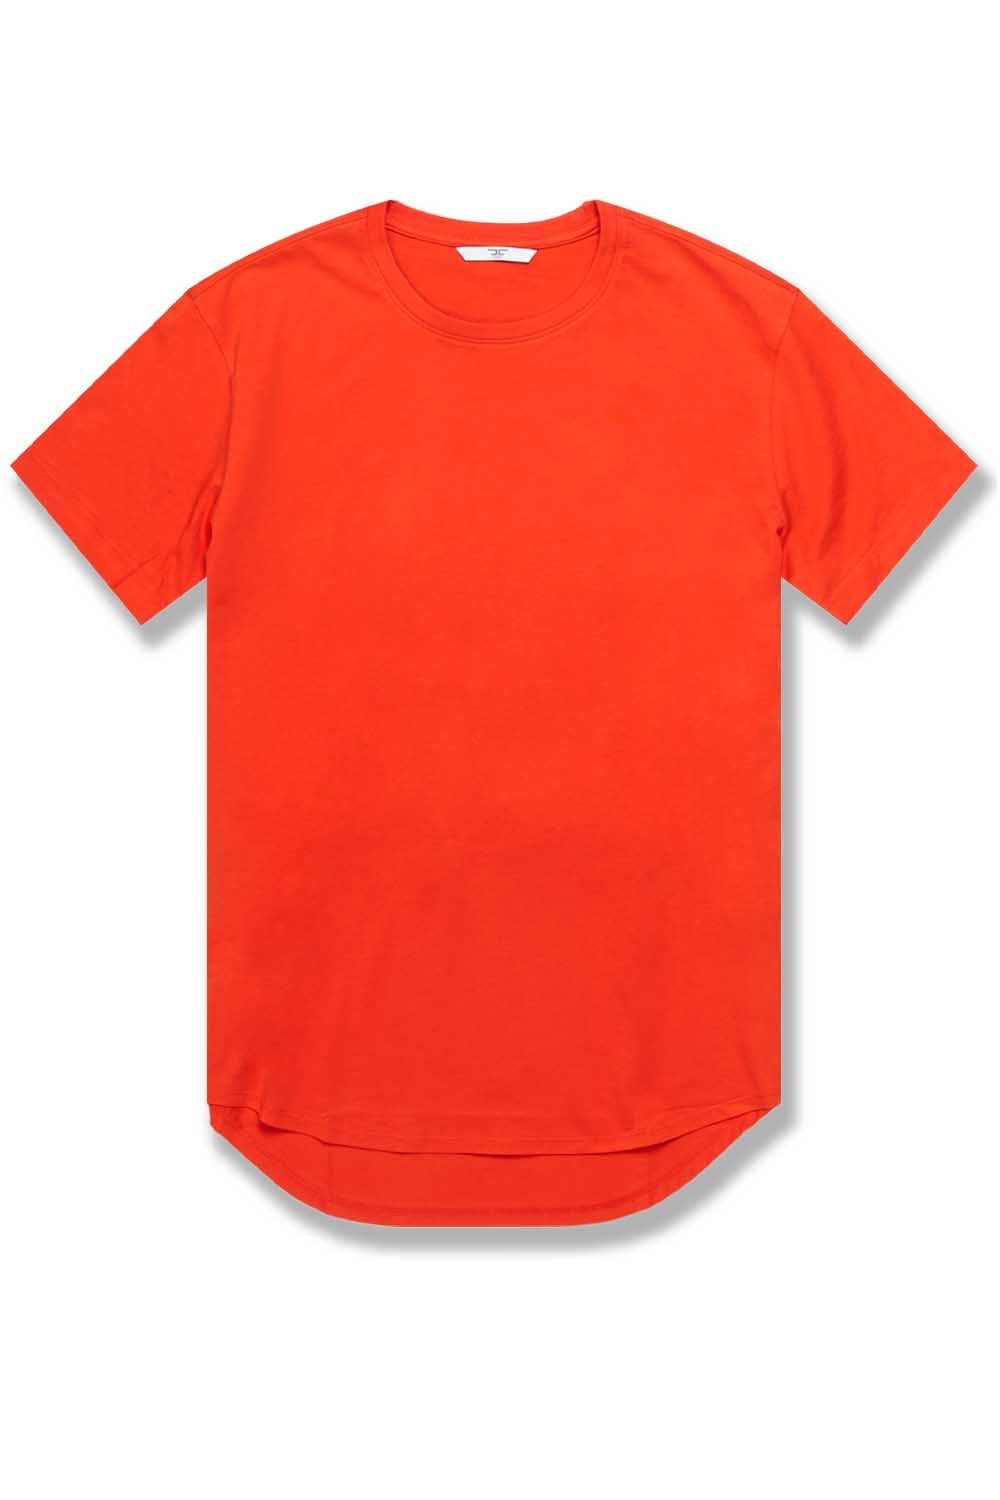 JC Big Men Big Men's Scallop T-Shirt (Name Your Price) Big Red / 4XL